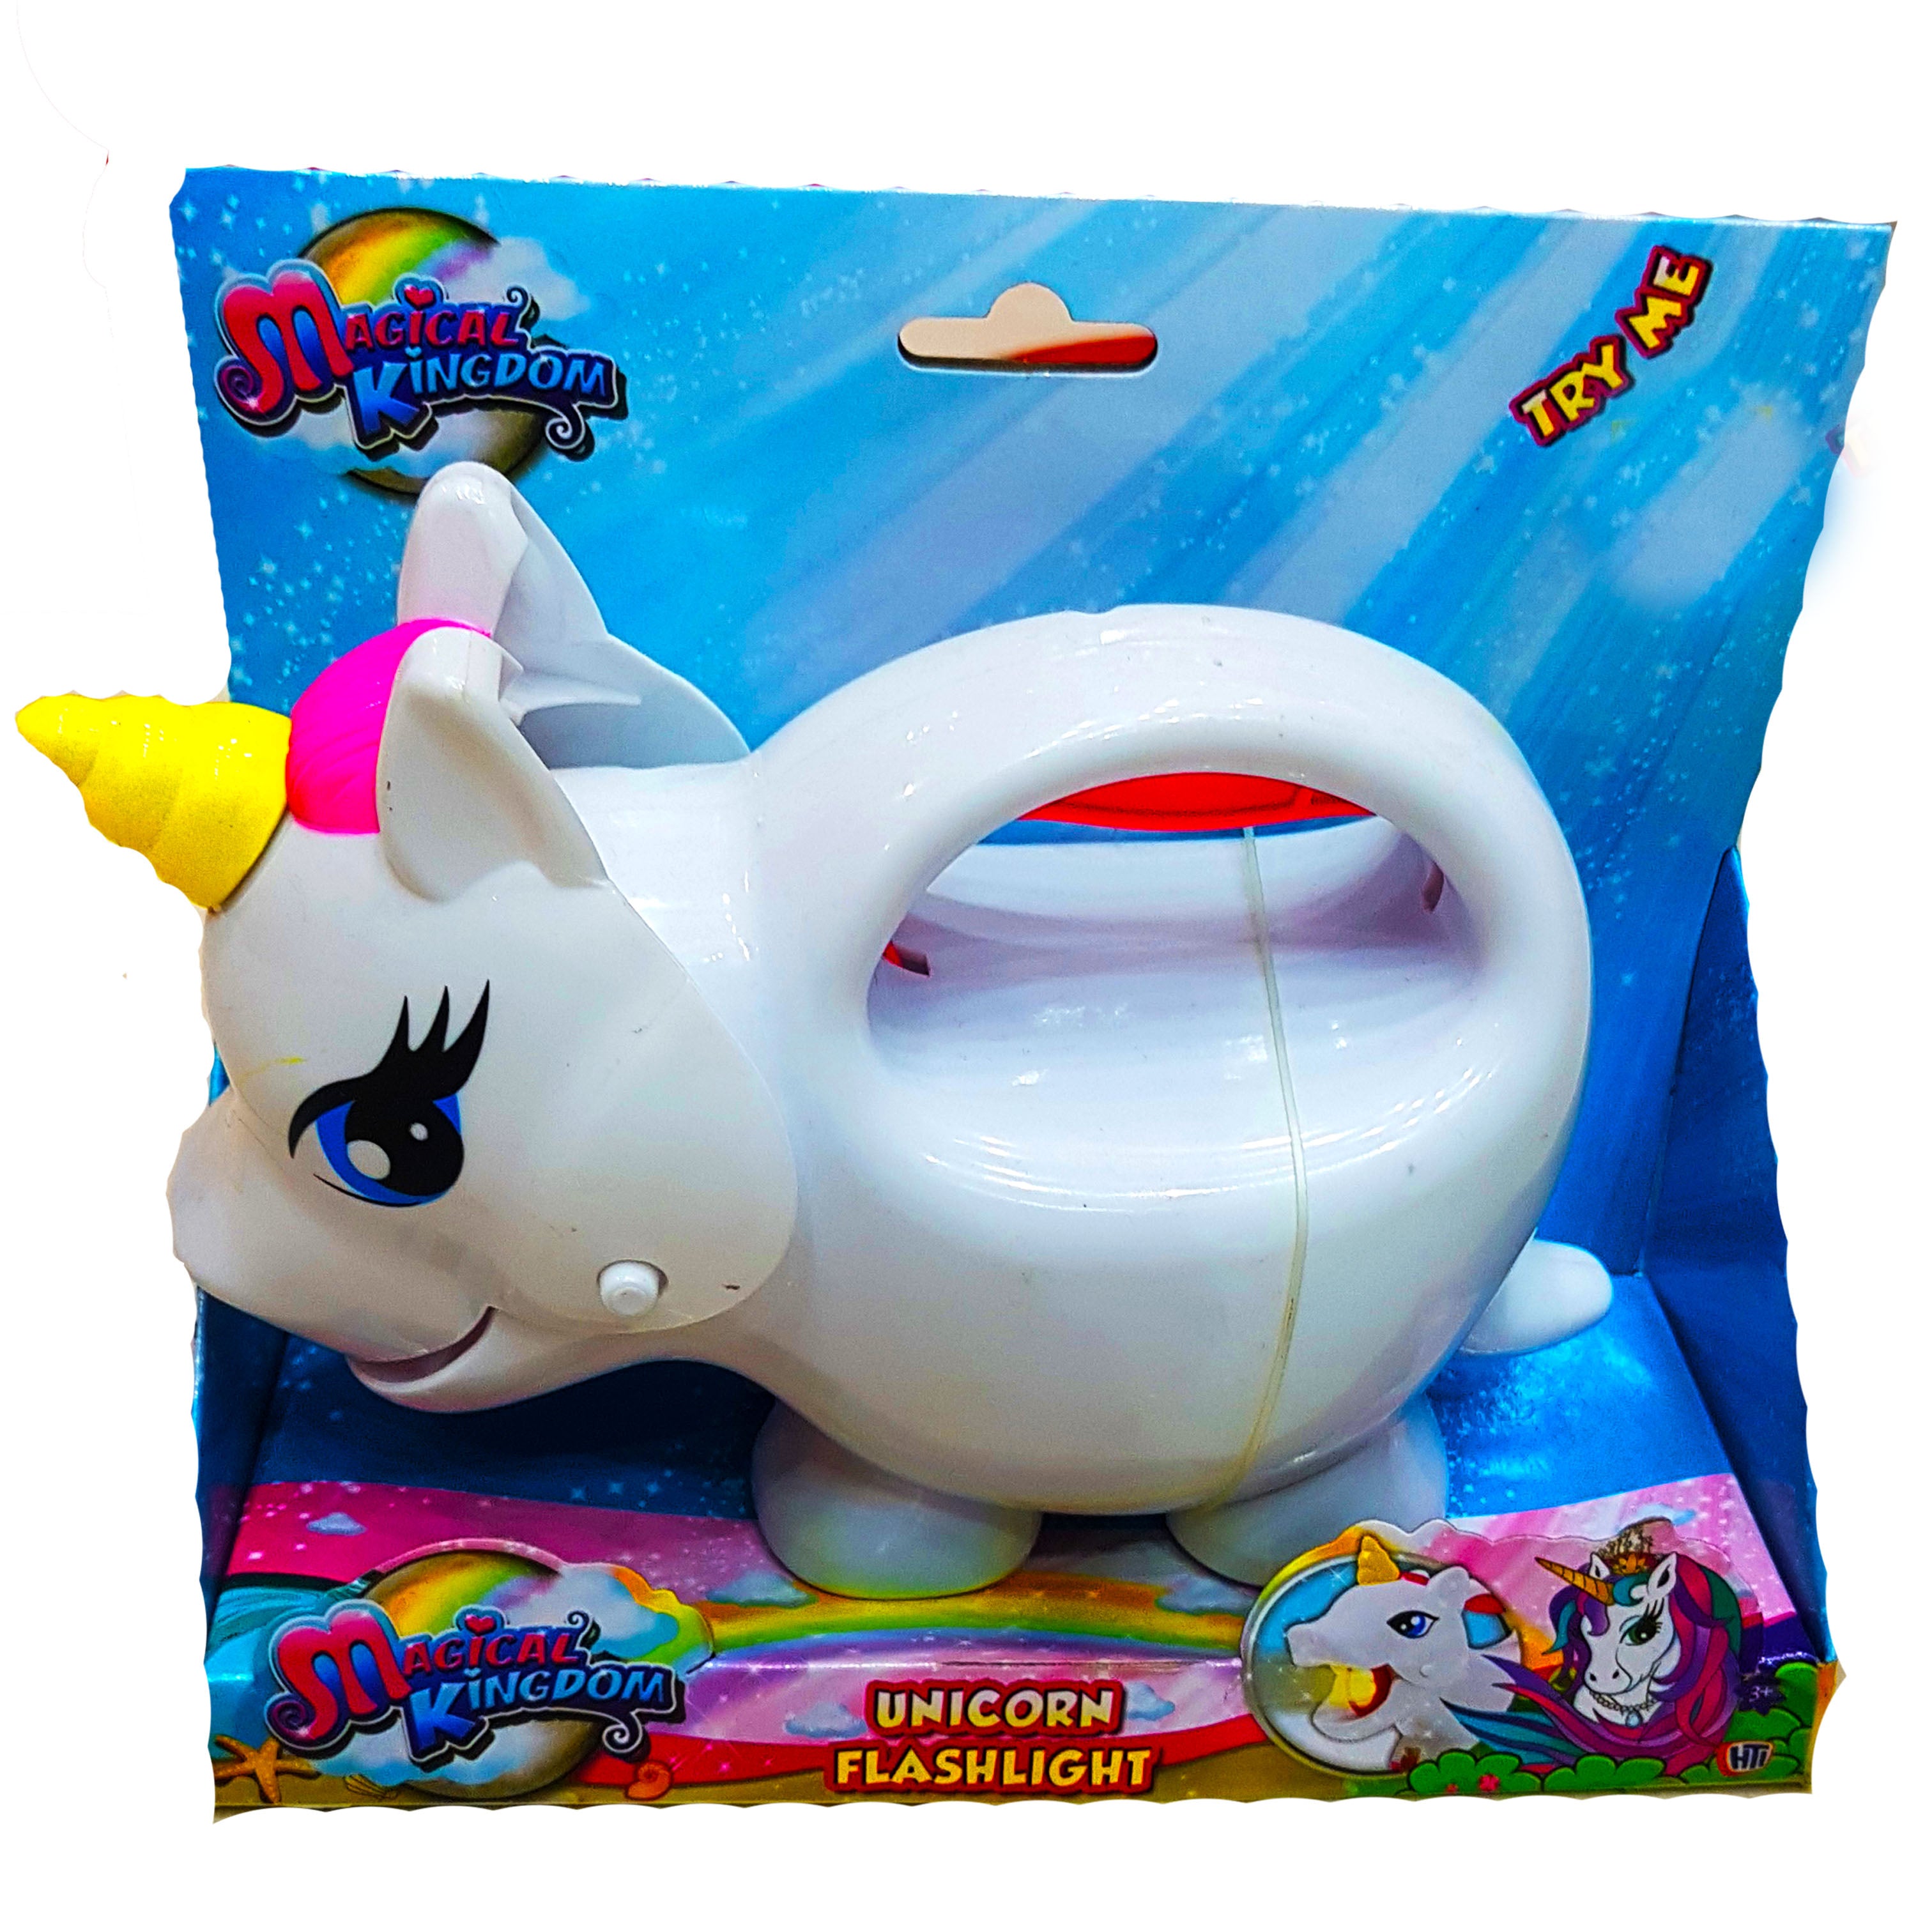 Magical Kingdom Unicorn Flashlight - Enchanting Toy for Girls Ages 3+